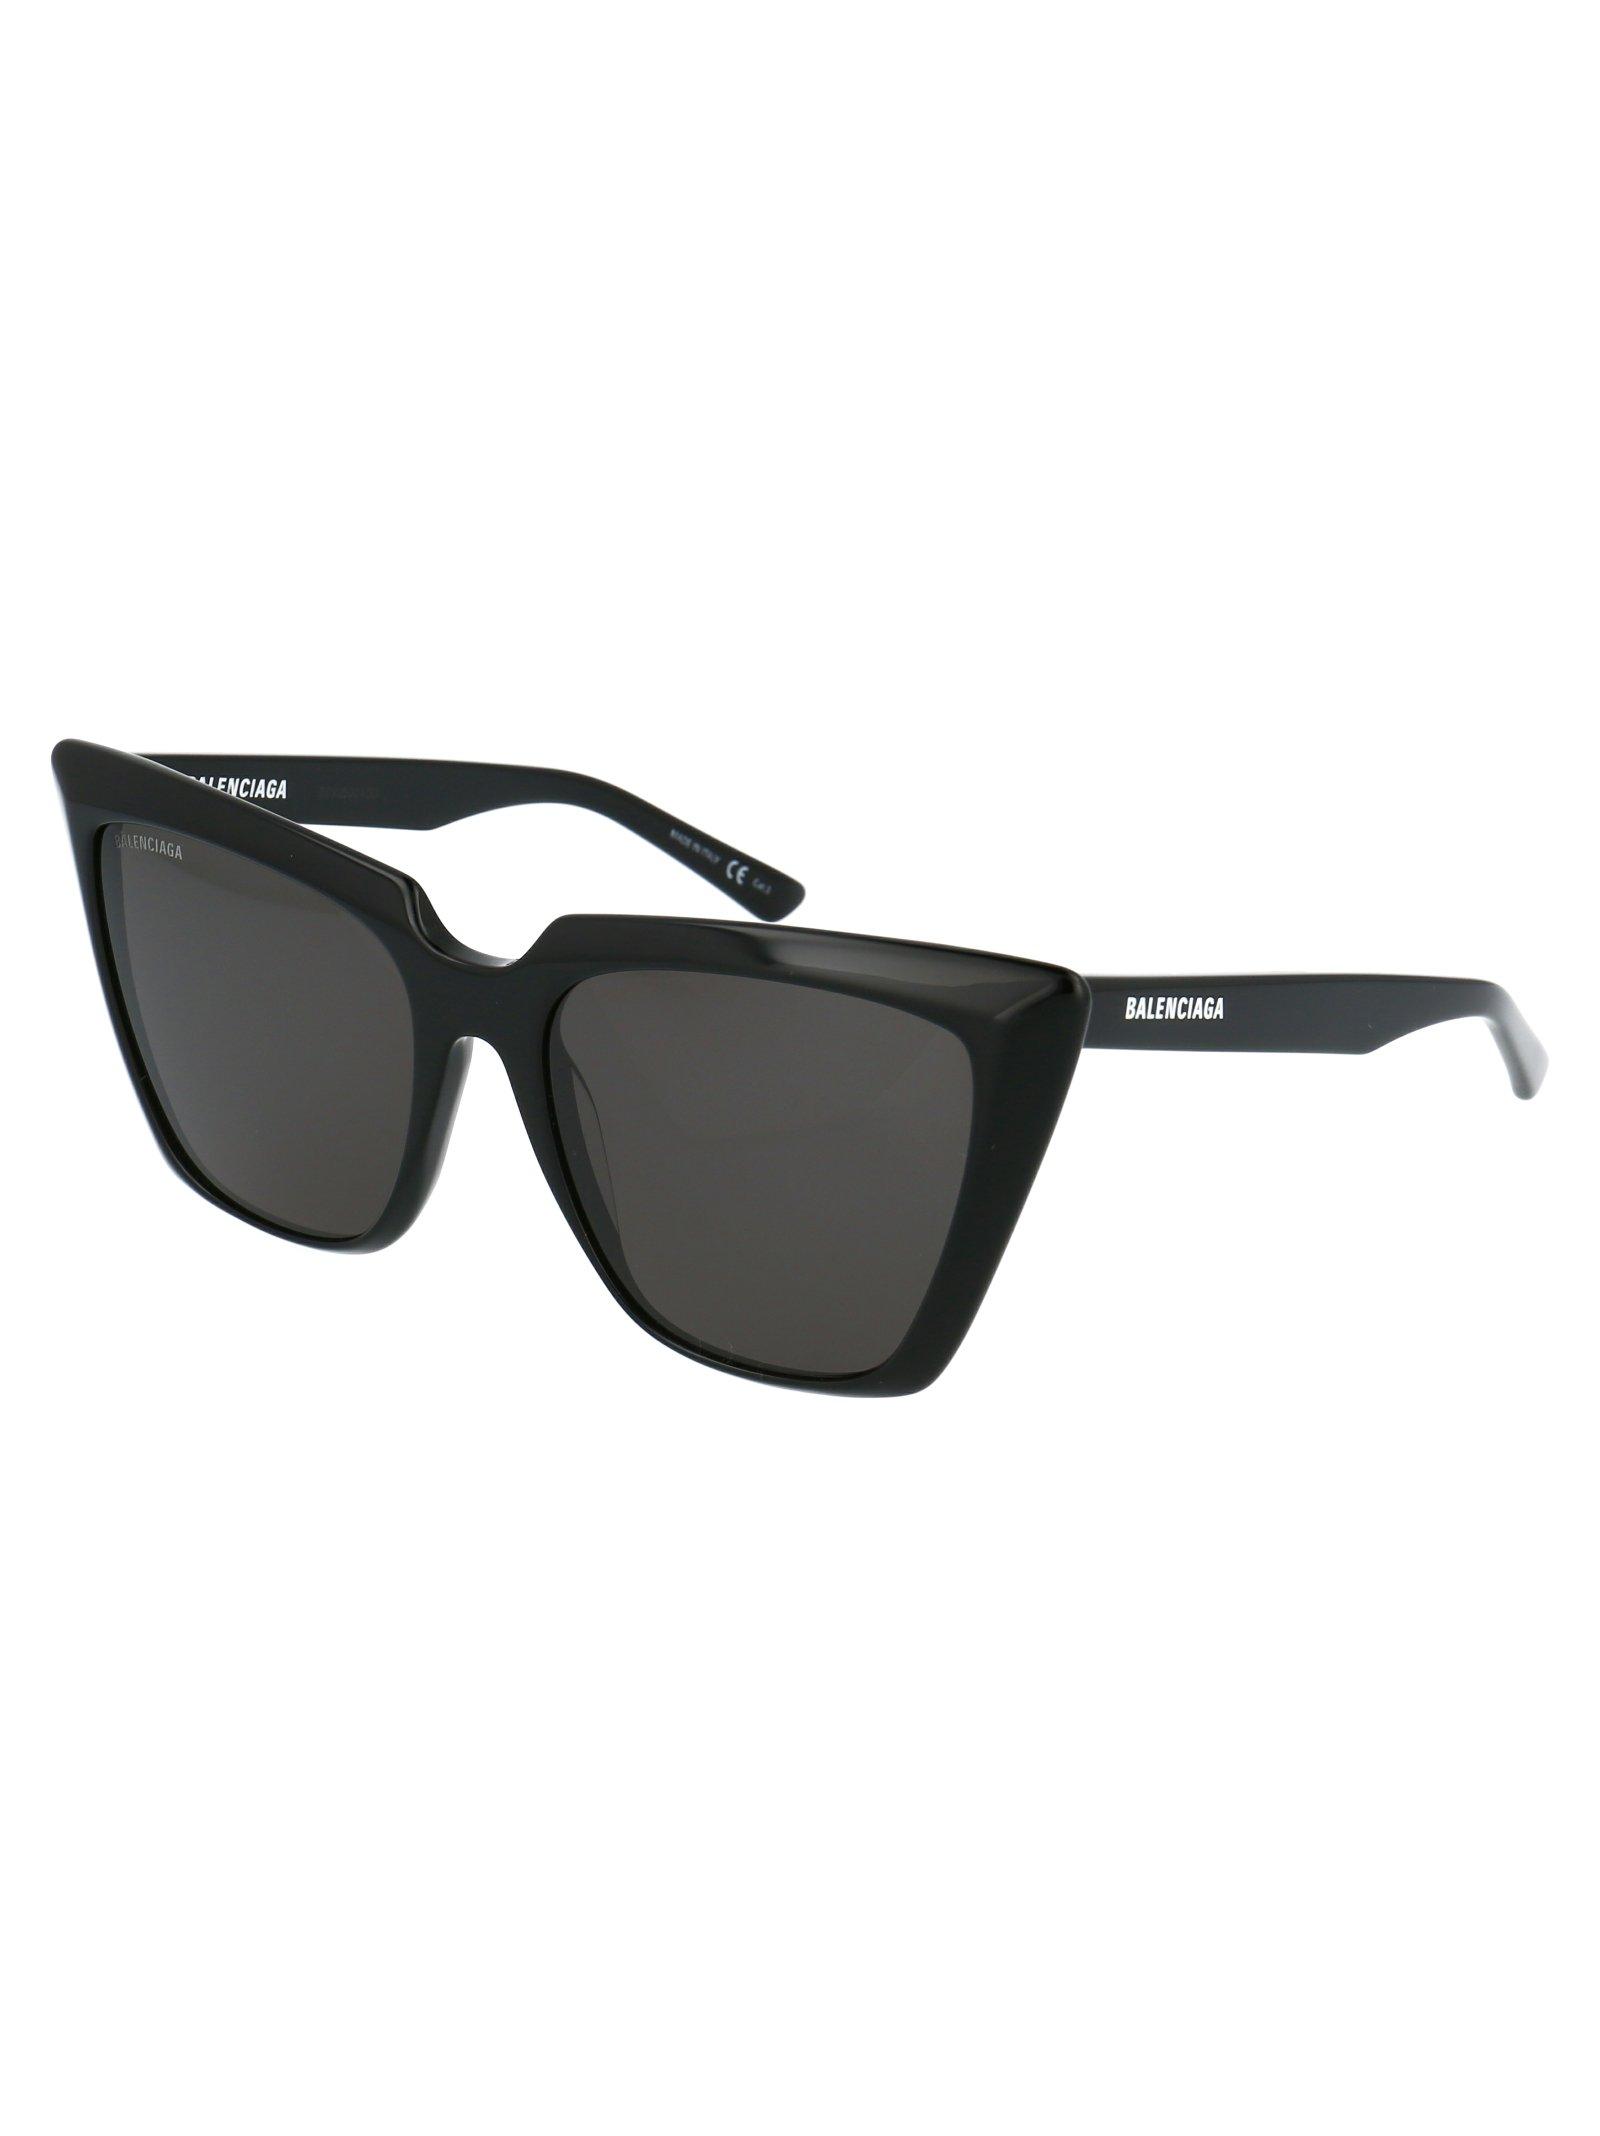 Balenciaga Cateye Sunglasses in Black Lyst